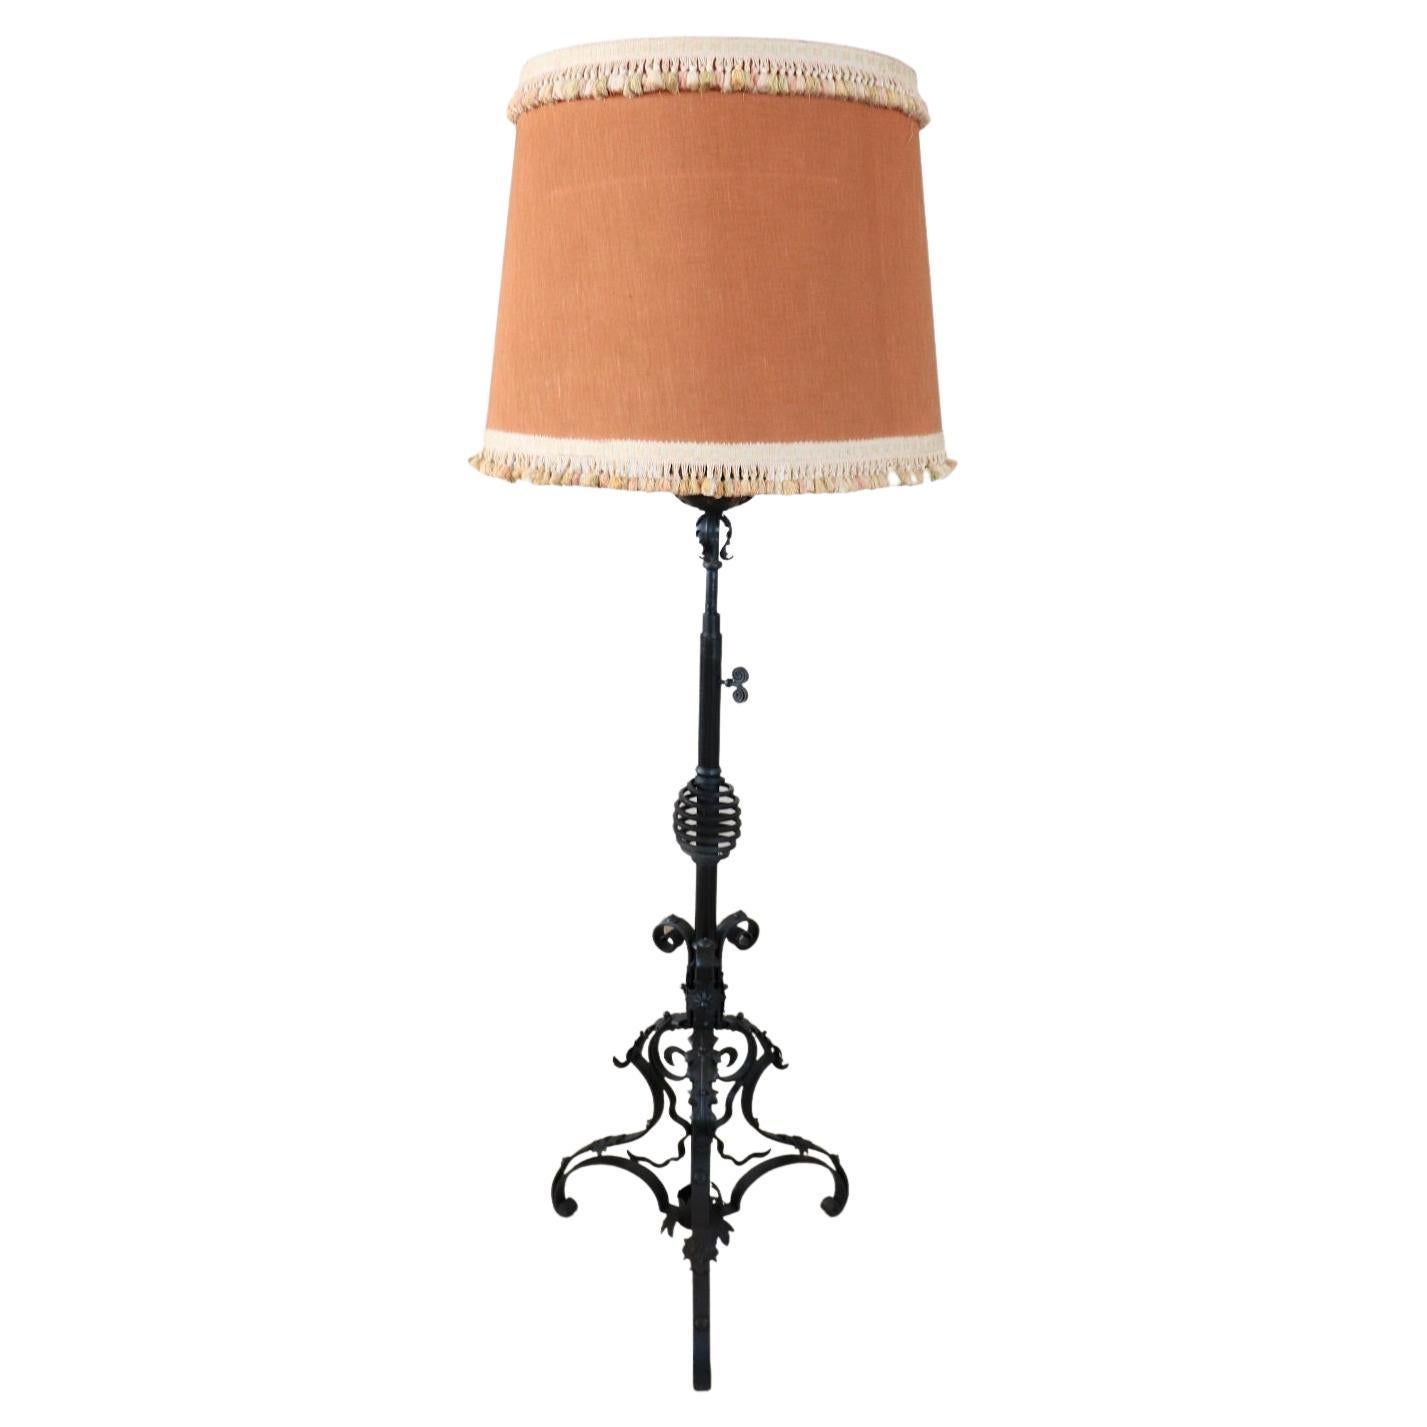 Early 20th Century Italian Wrought Iron Floor Lamp, Height Adjustable For Sale